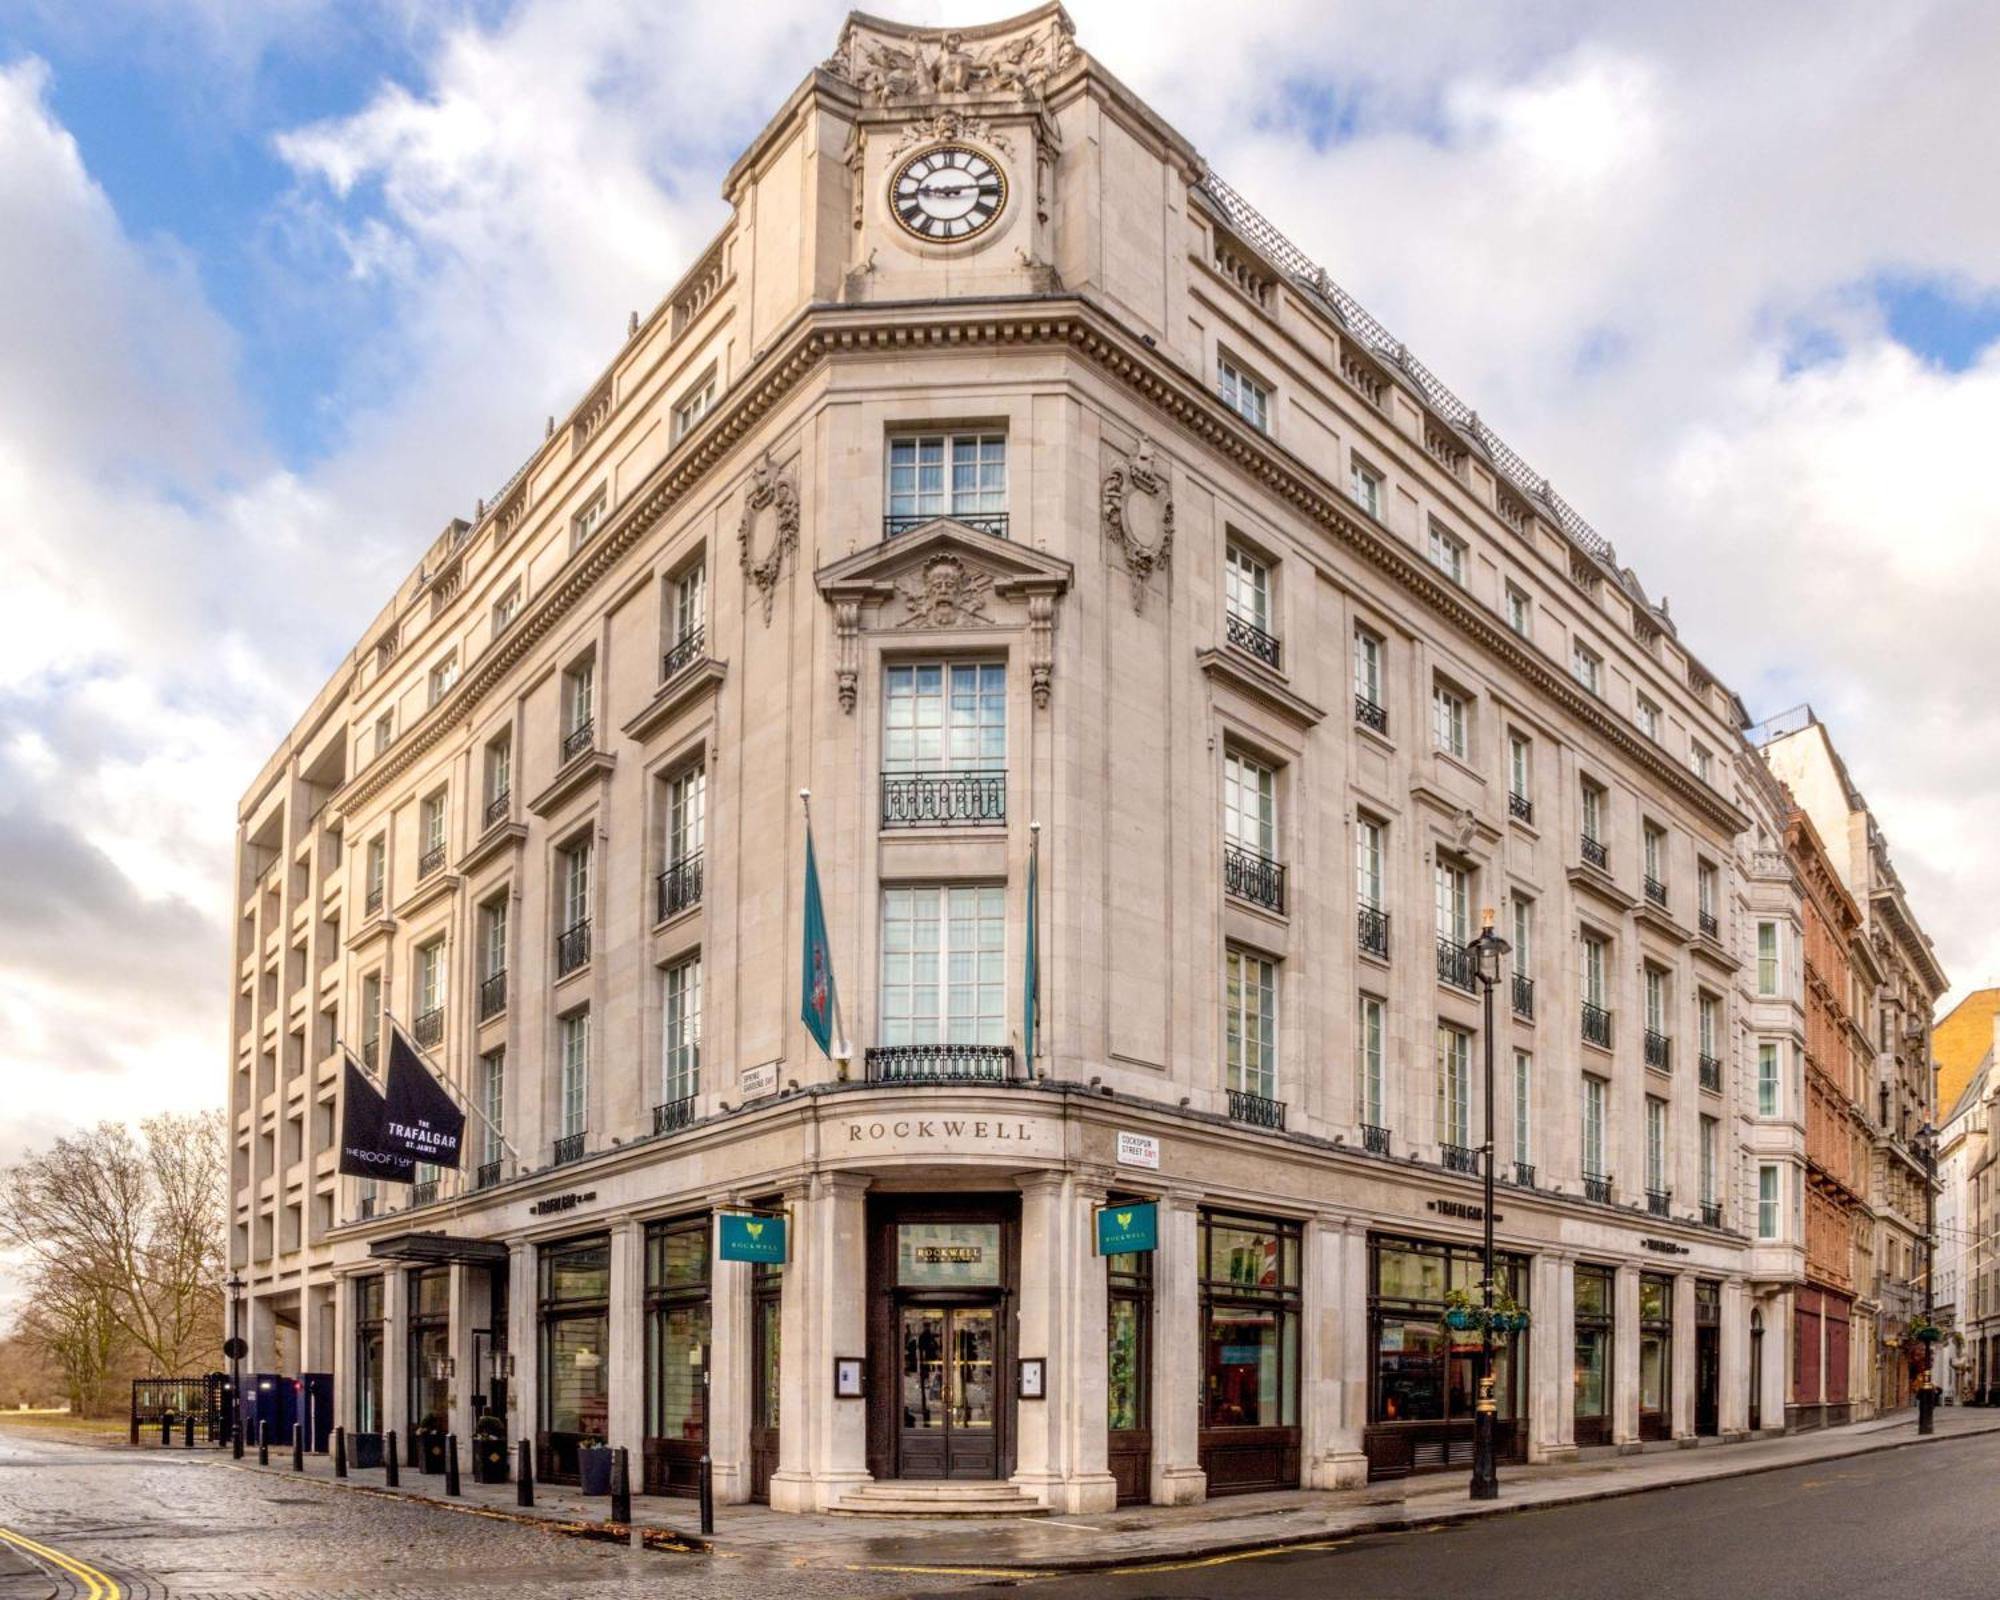 The Trafalgar St. James, London Curio Collection By Hilton Exterior photo